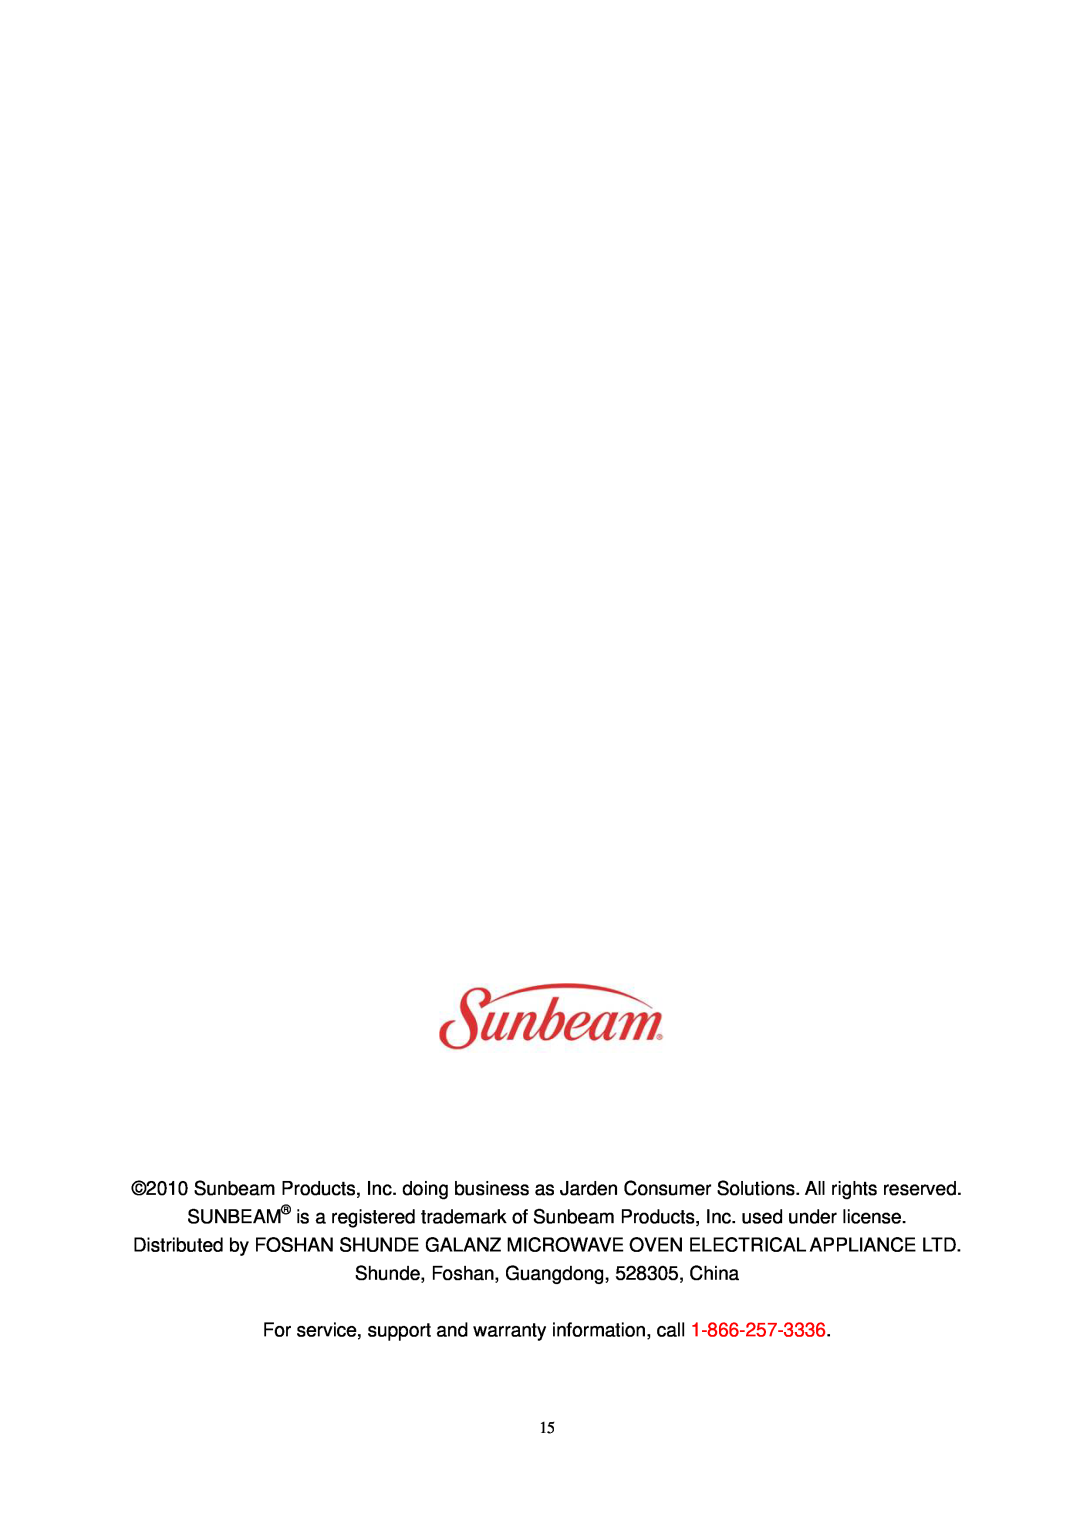 Sunbeam SGC7701 manual Shunde, Foshan, Guangdong, 528305, China 